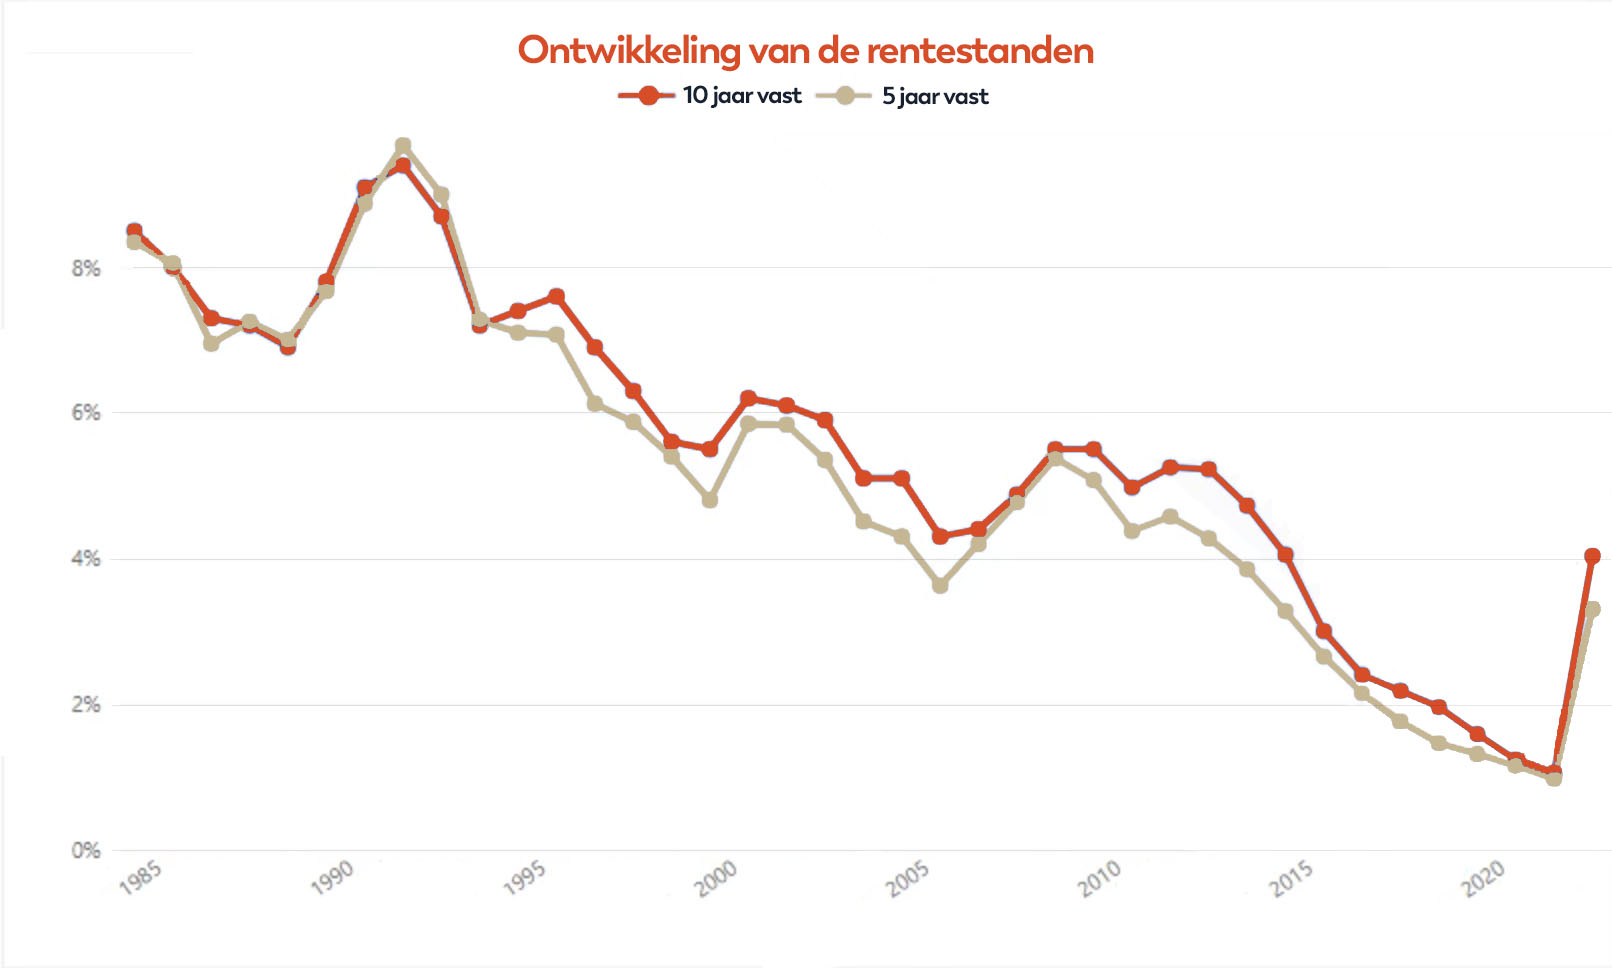 Rising interest rates affect Amsterdam Housing Market